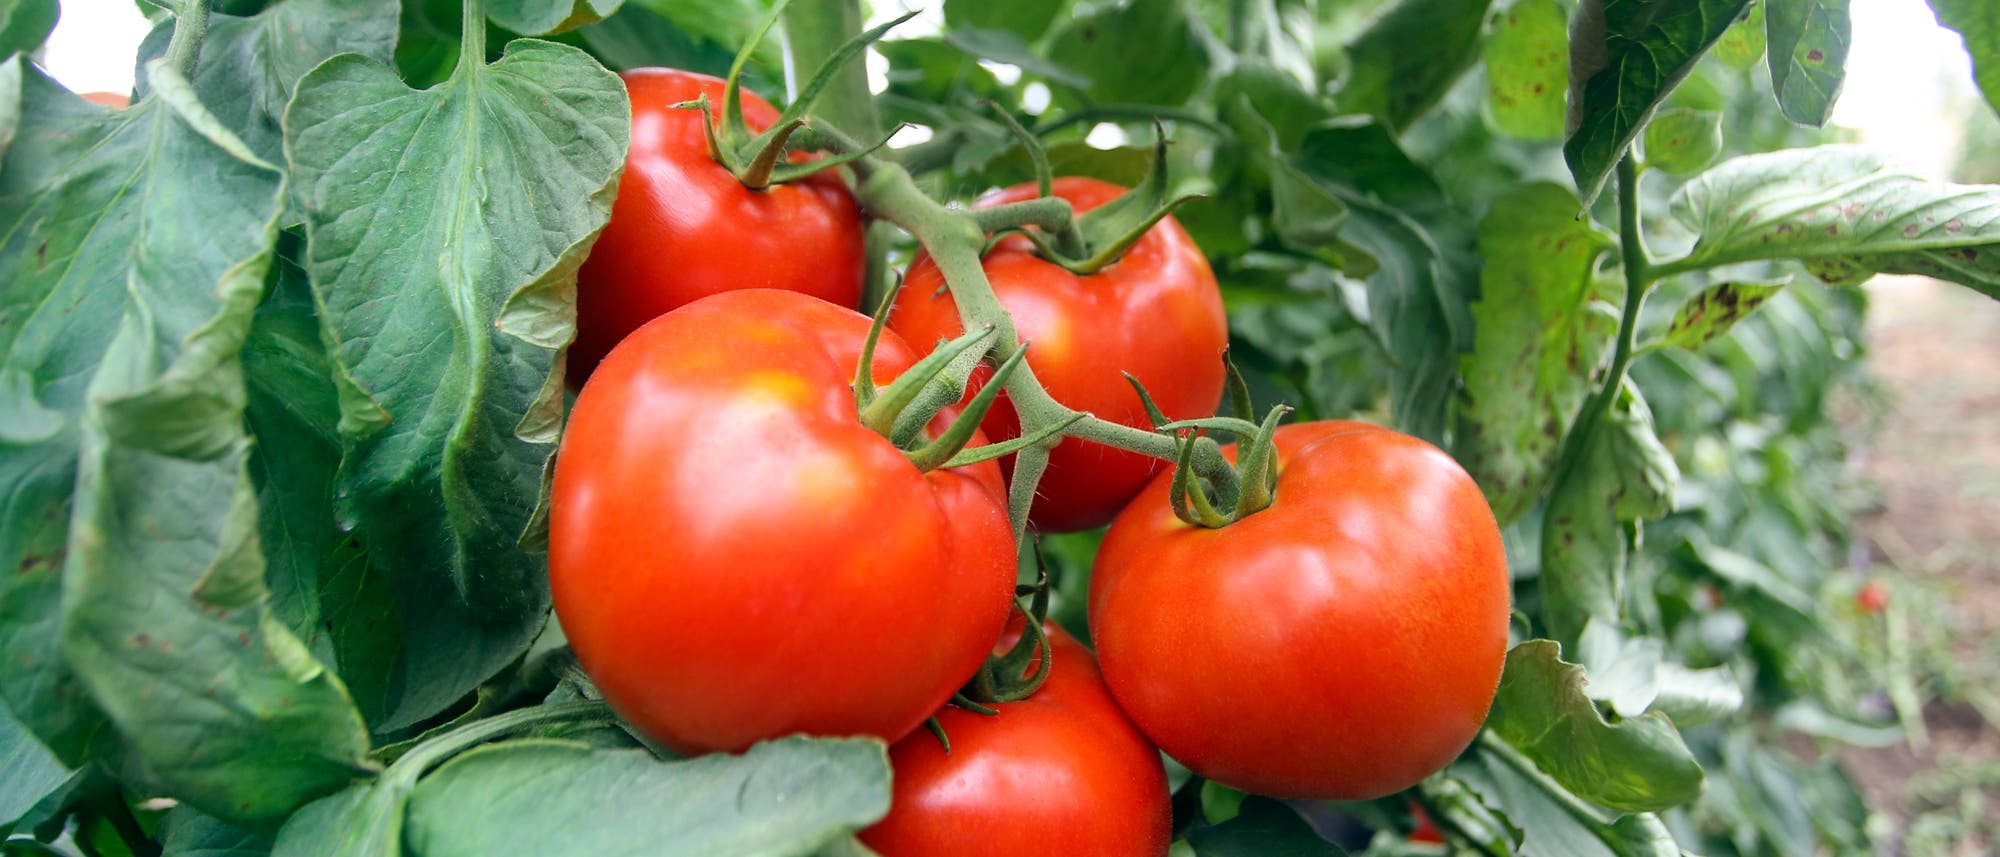 Mehrere Tomaten an der Pflanze.